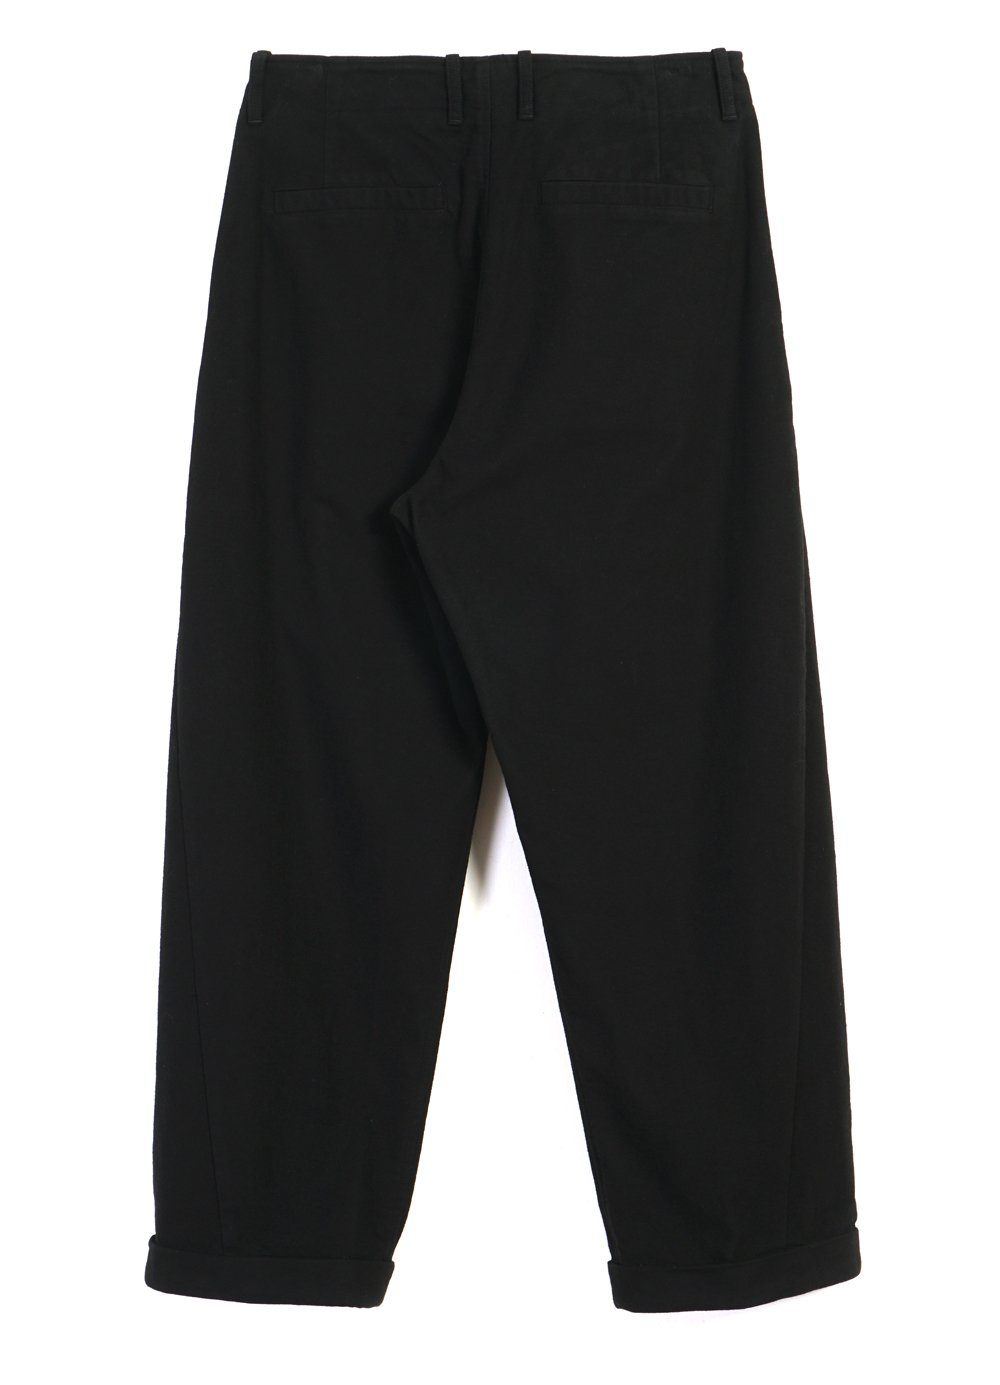 HANSEN GARMENTS - BOBBY | Super Wide Pleated Trousers | Black - HANSEN Garments